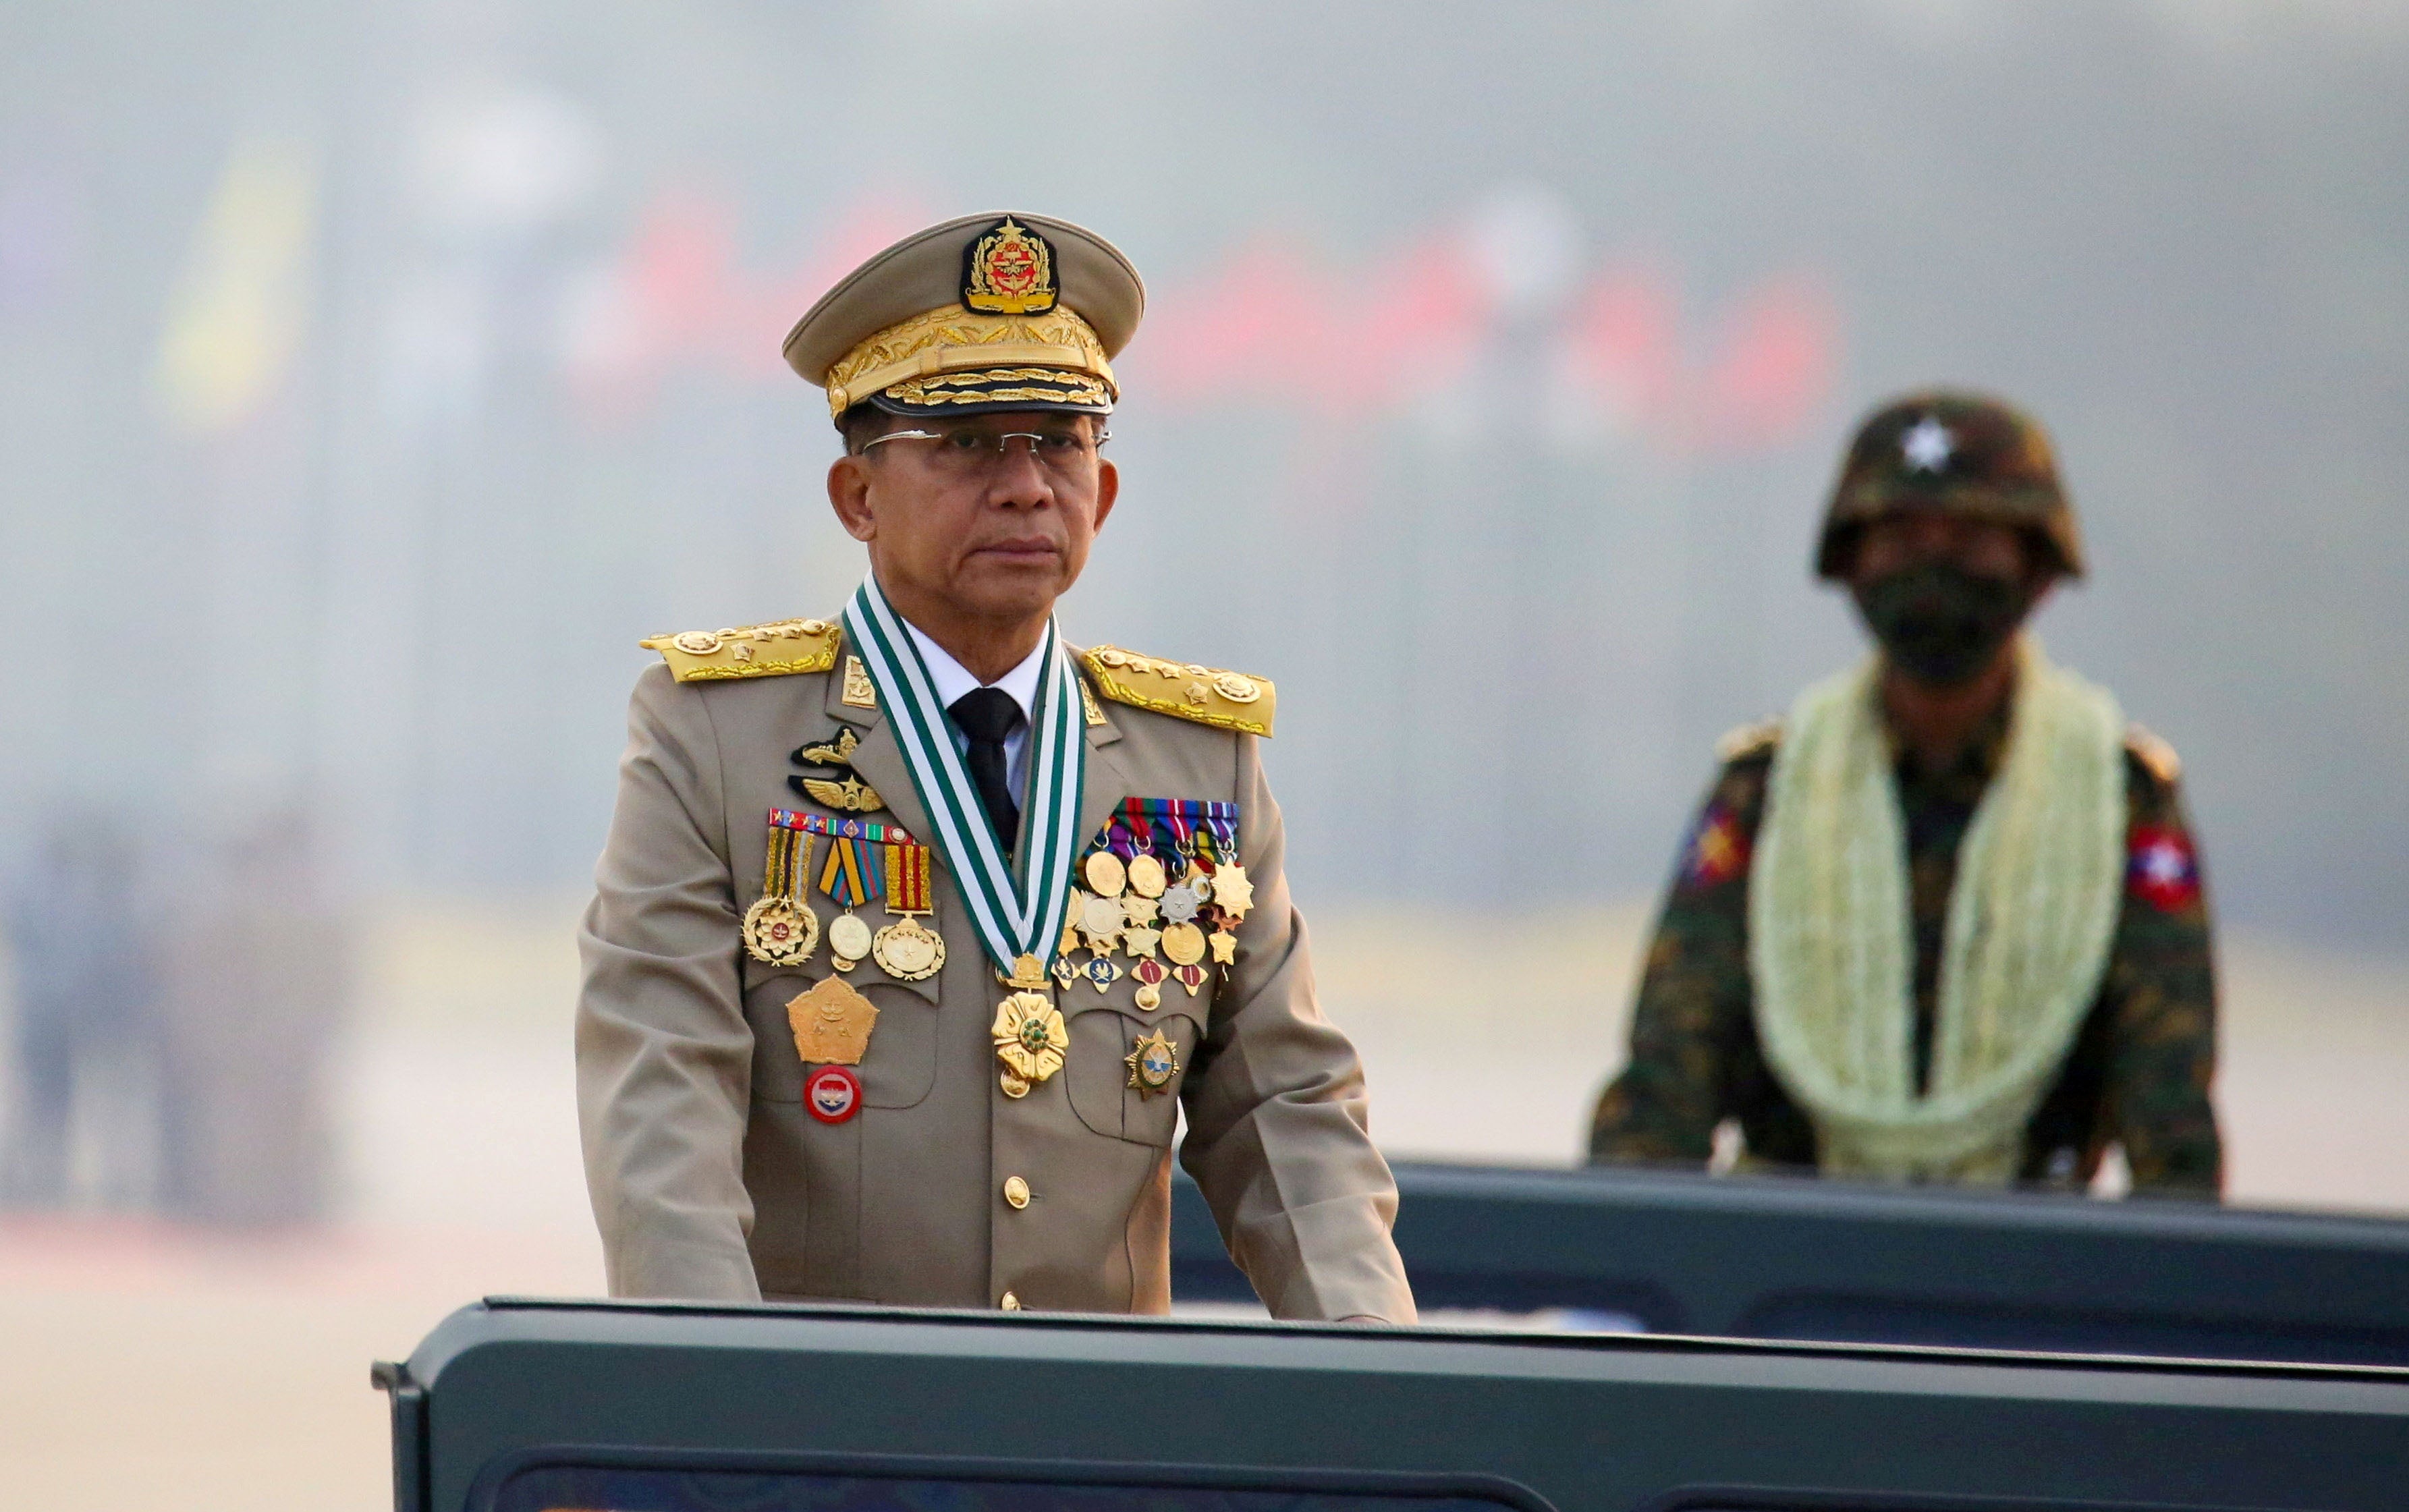 Myanmar’s military ruler Senior General Min Aung Hlaing